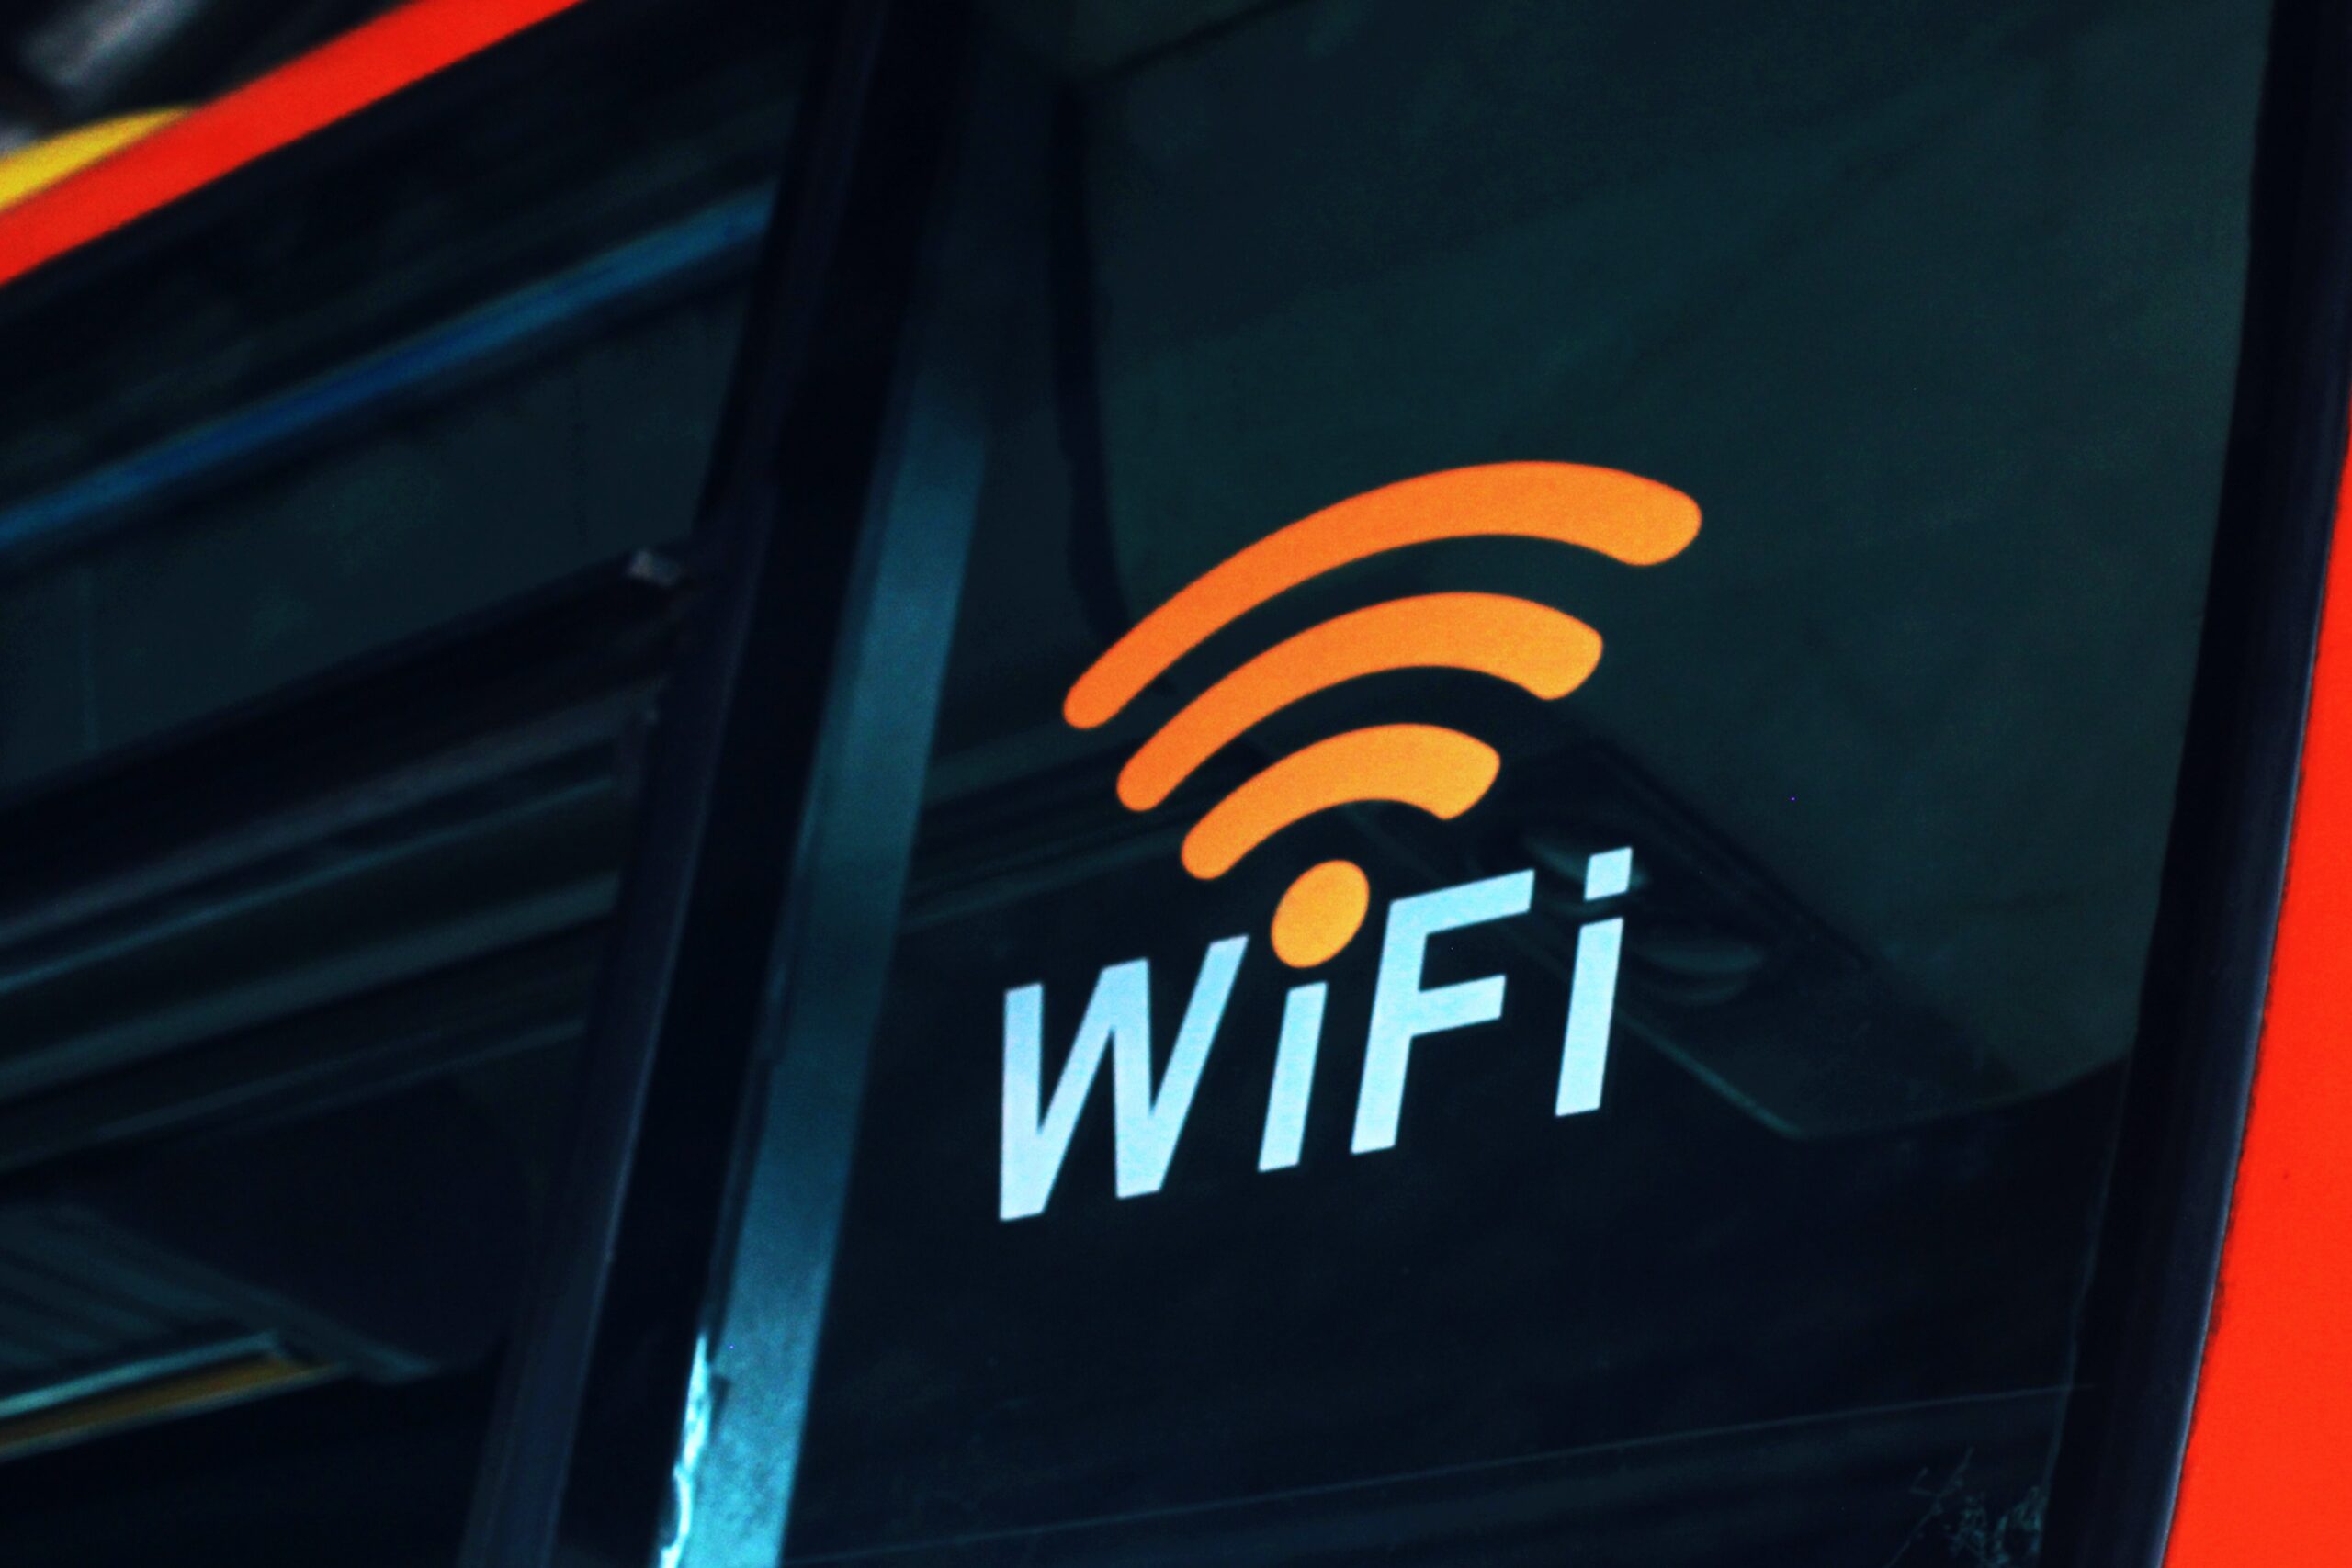 The wi-fi symbol